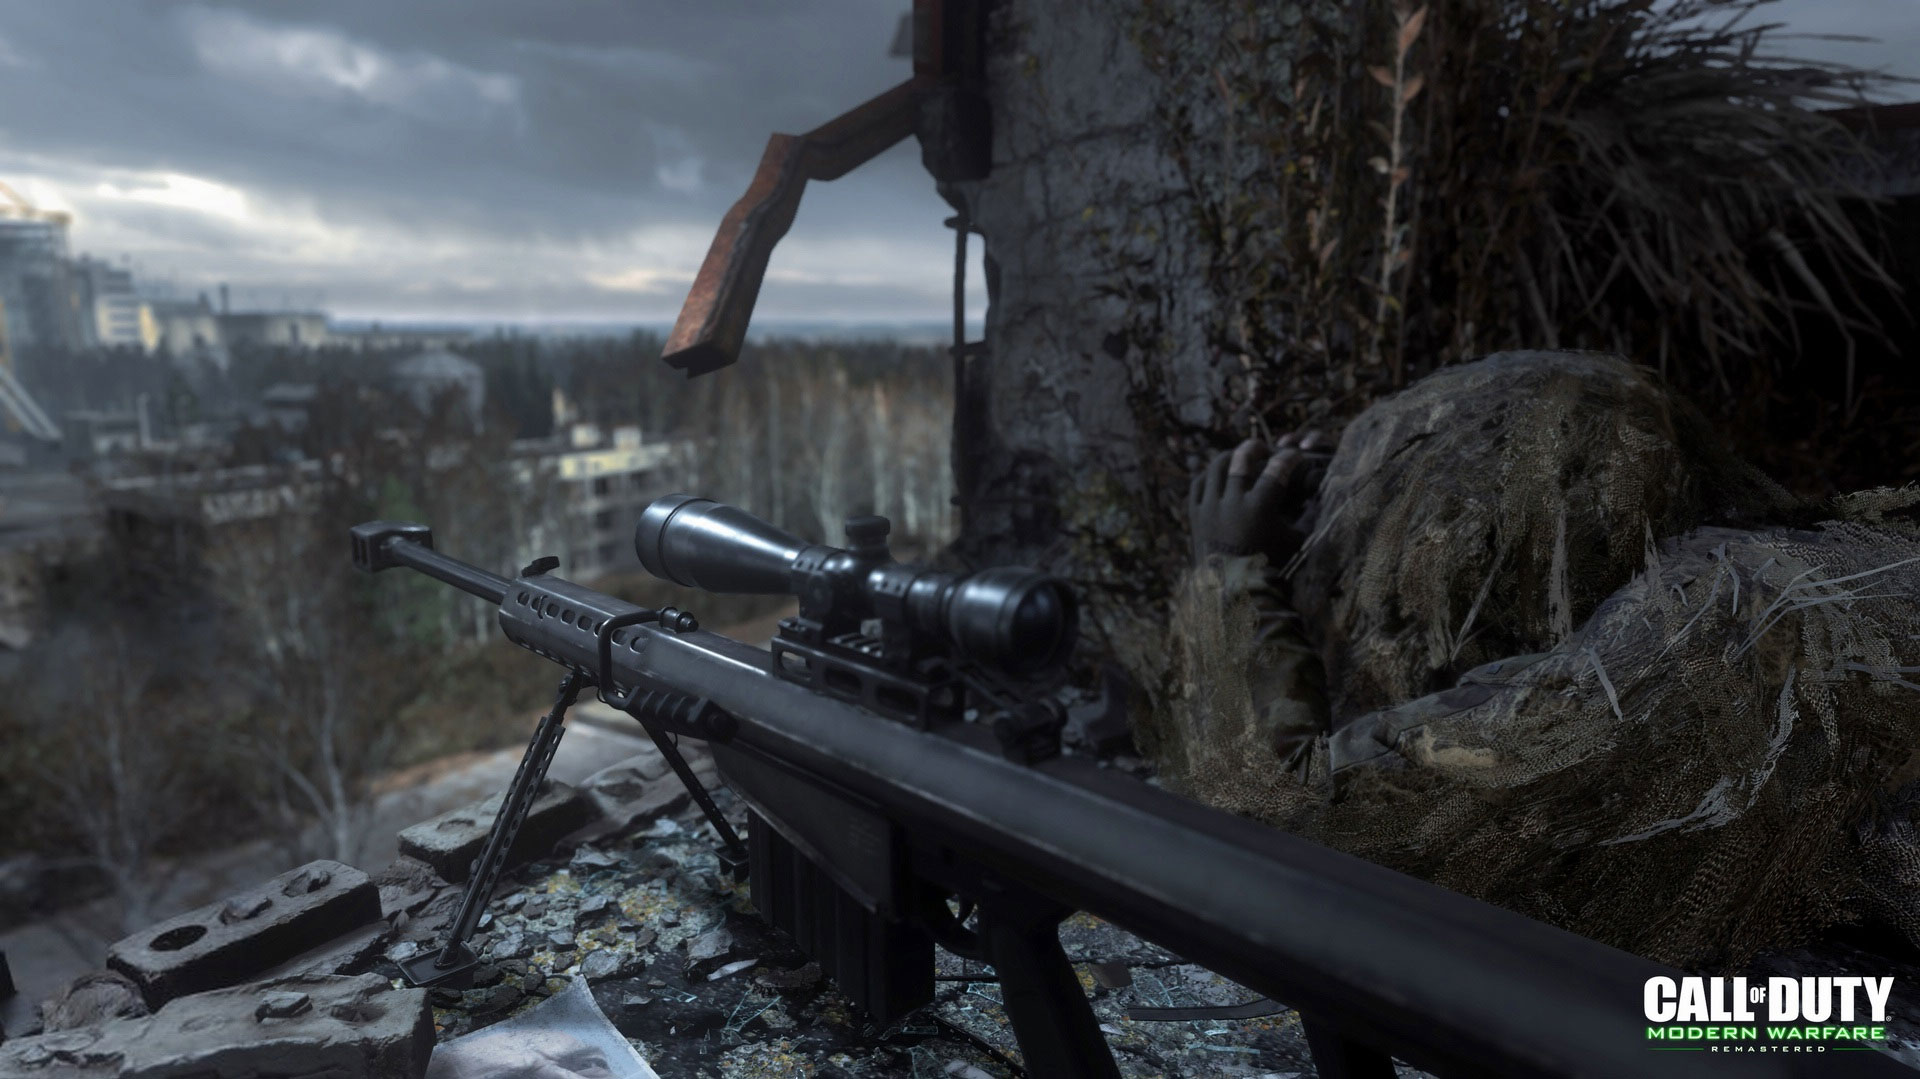 Call of Duty: Modern Warfare Remastered dostaje 6 darmowych map